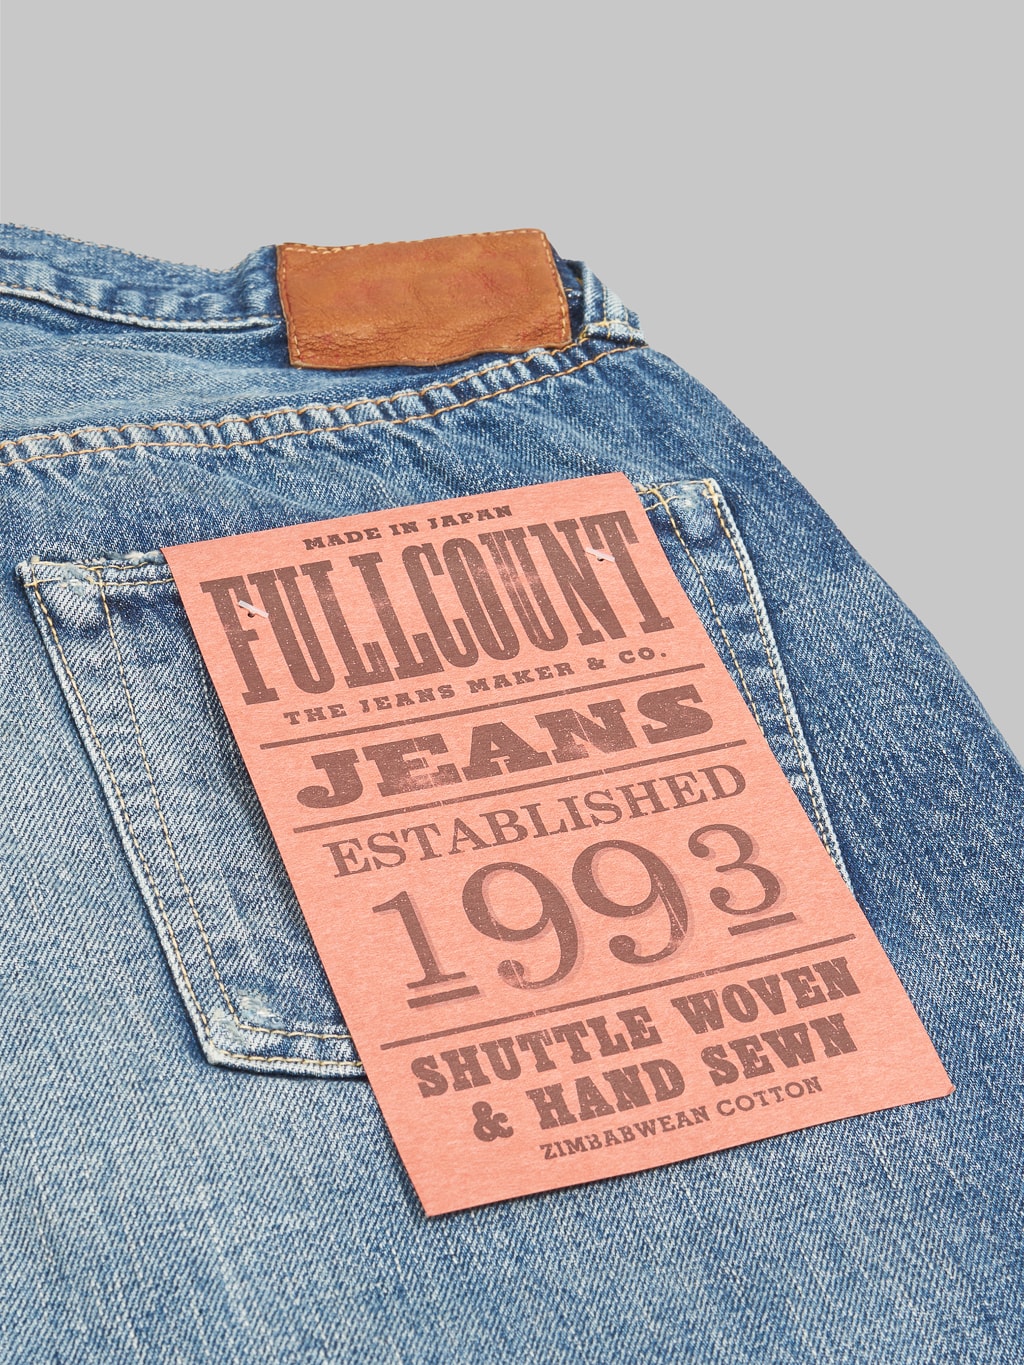 Fullcount 1108 Dartford Slim Straight Jeans back pocket flasher